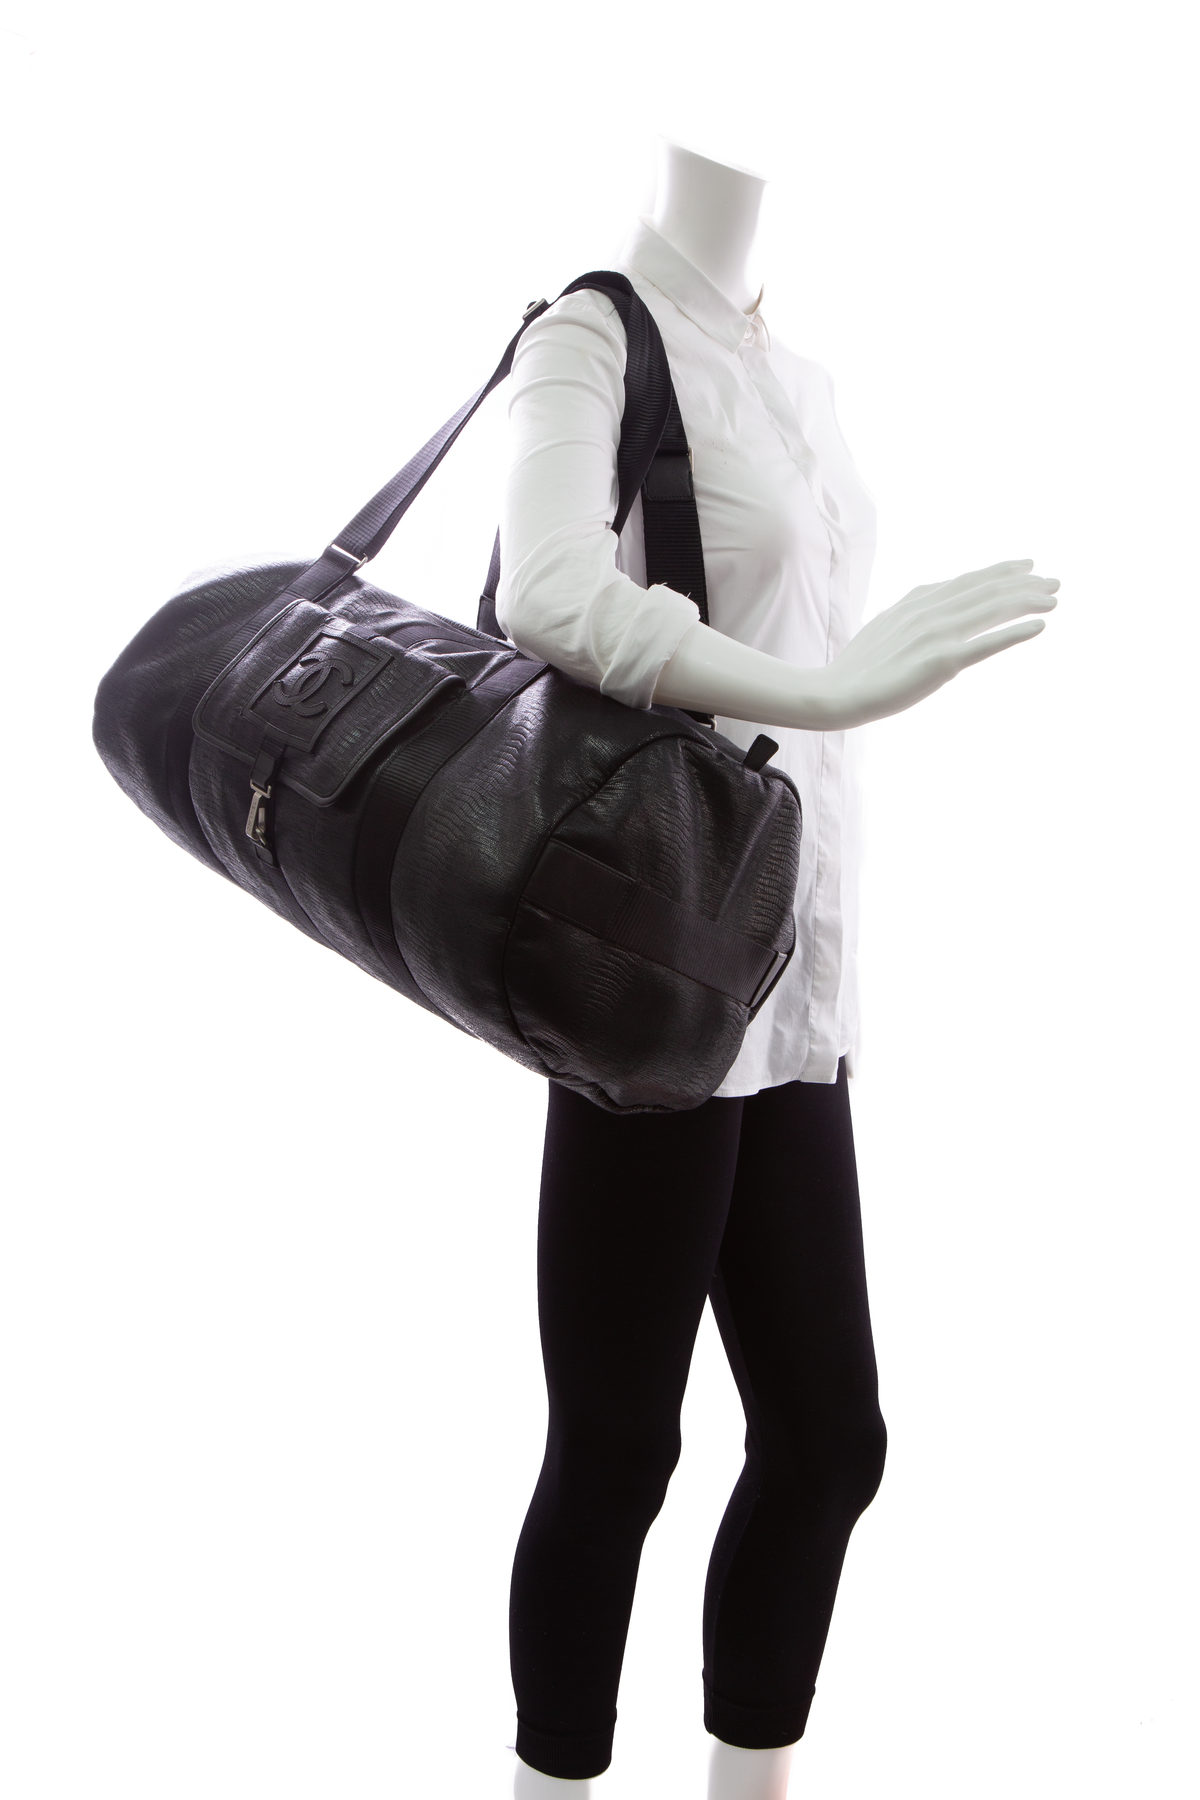 Chanel Sport Ligne Travel Bag - Couture USA